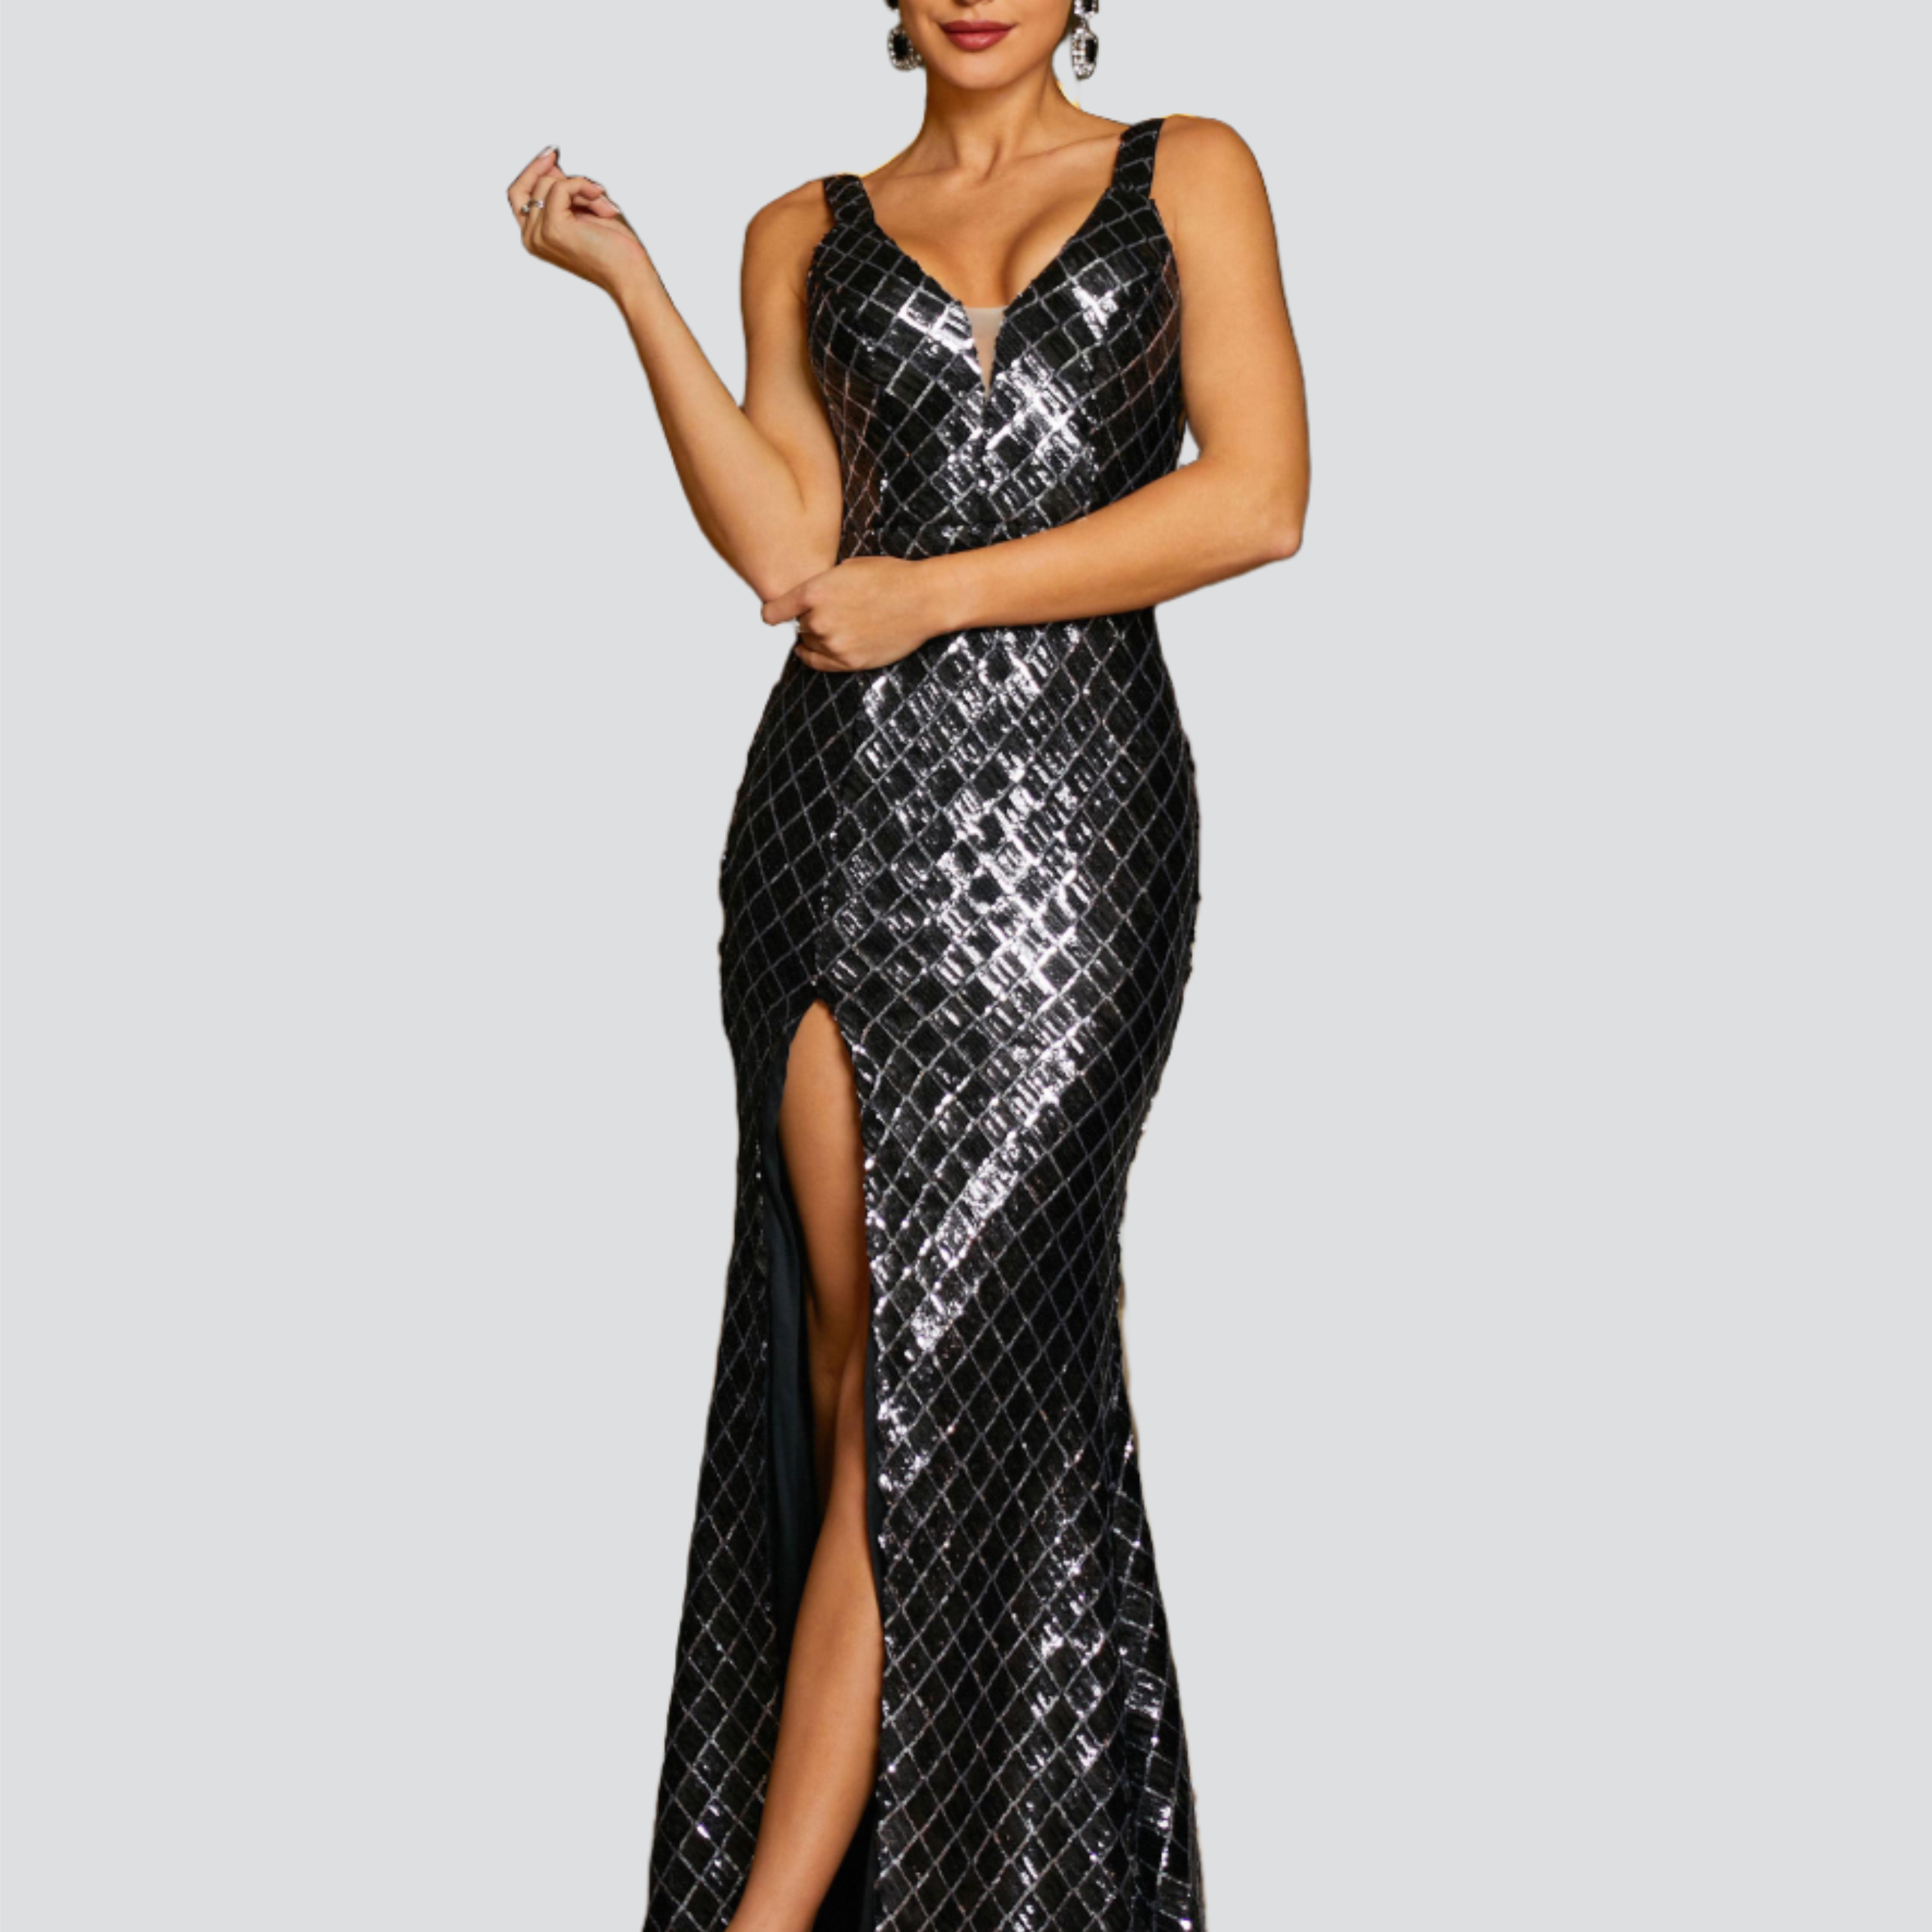 V-neck Backless High Split Sequin Black Prom Dress RM21336